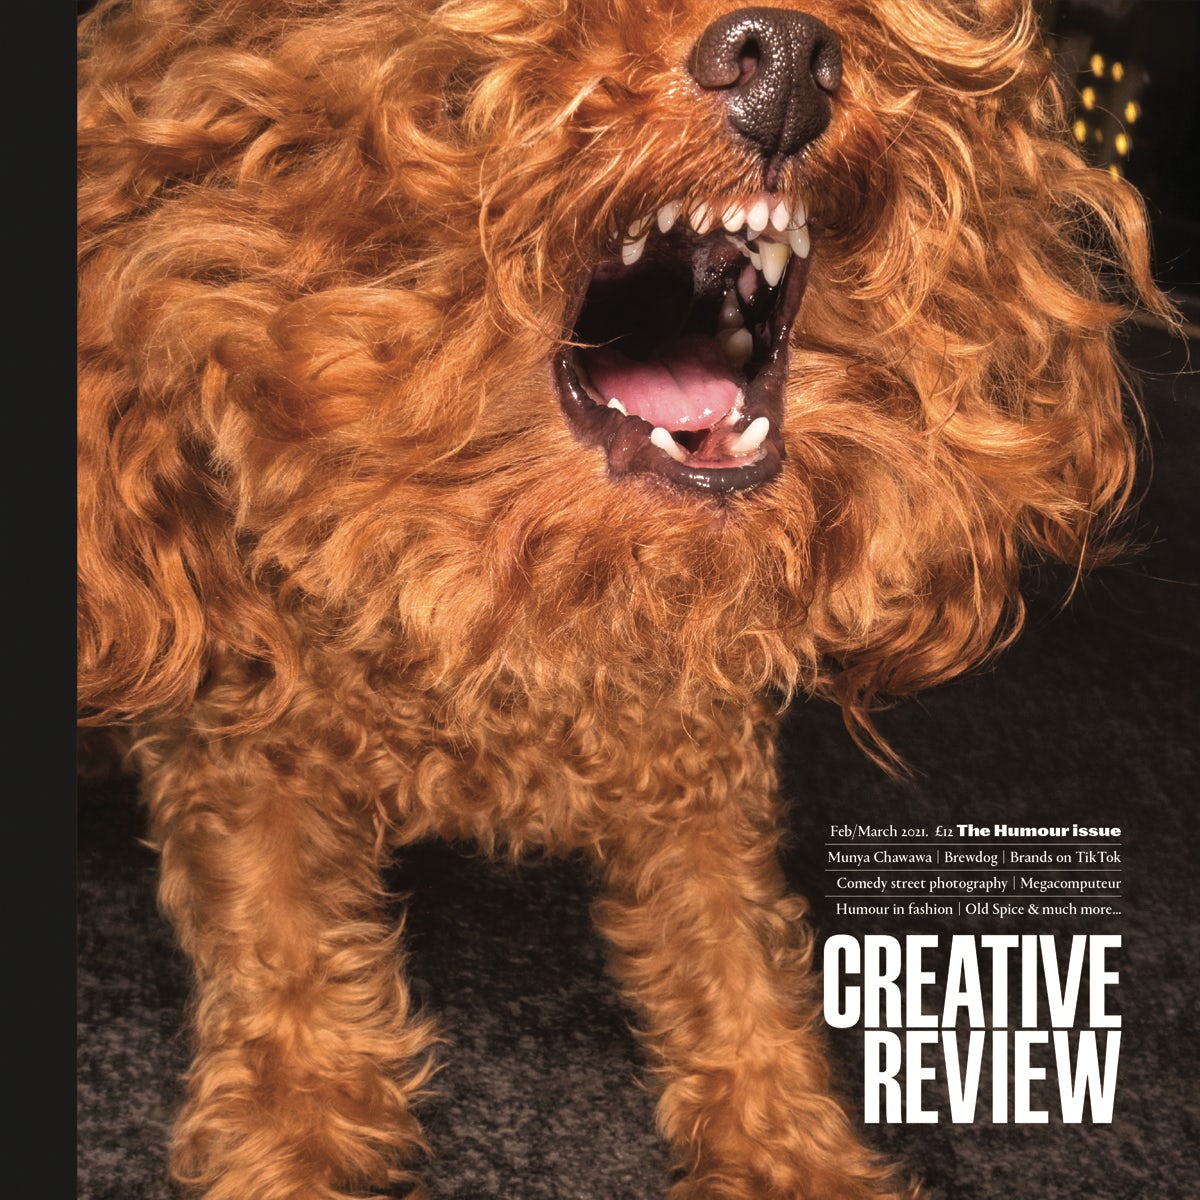 Creative Review n.1 vol. 41